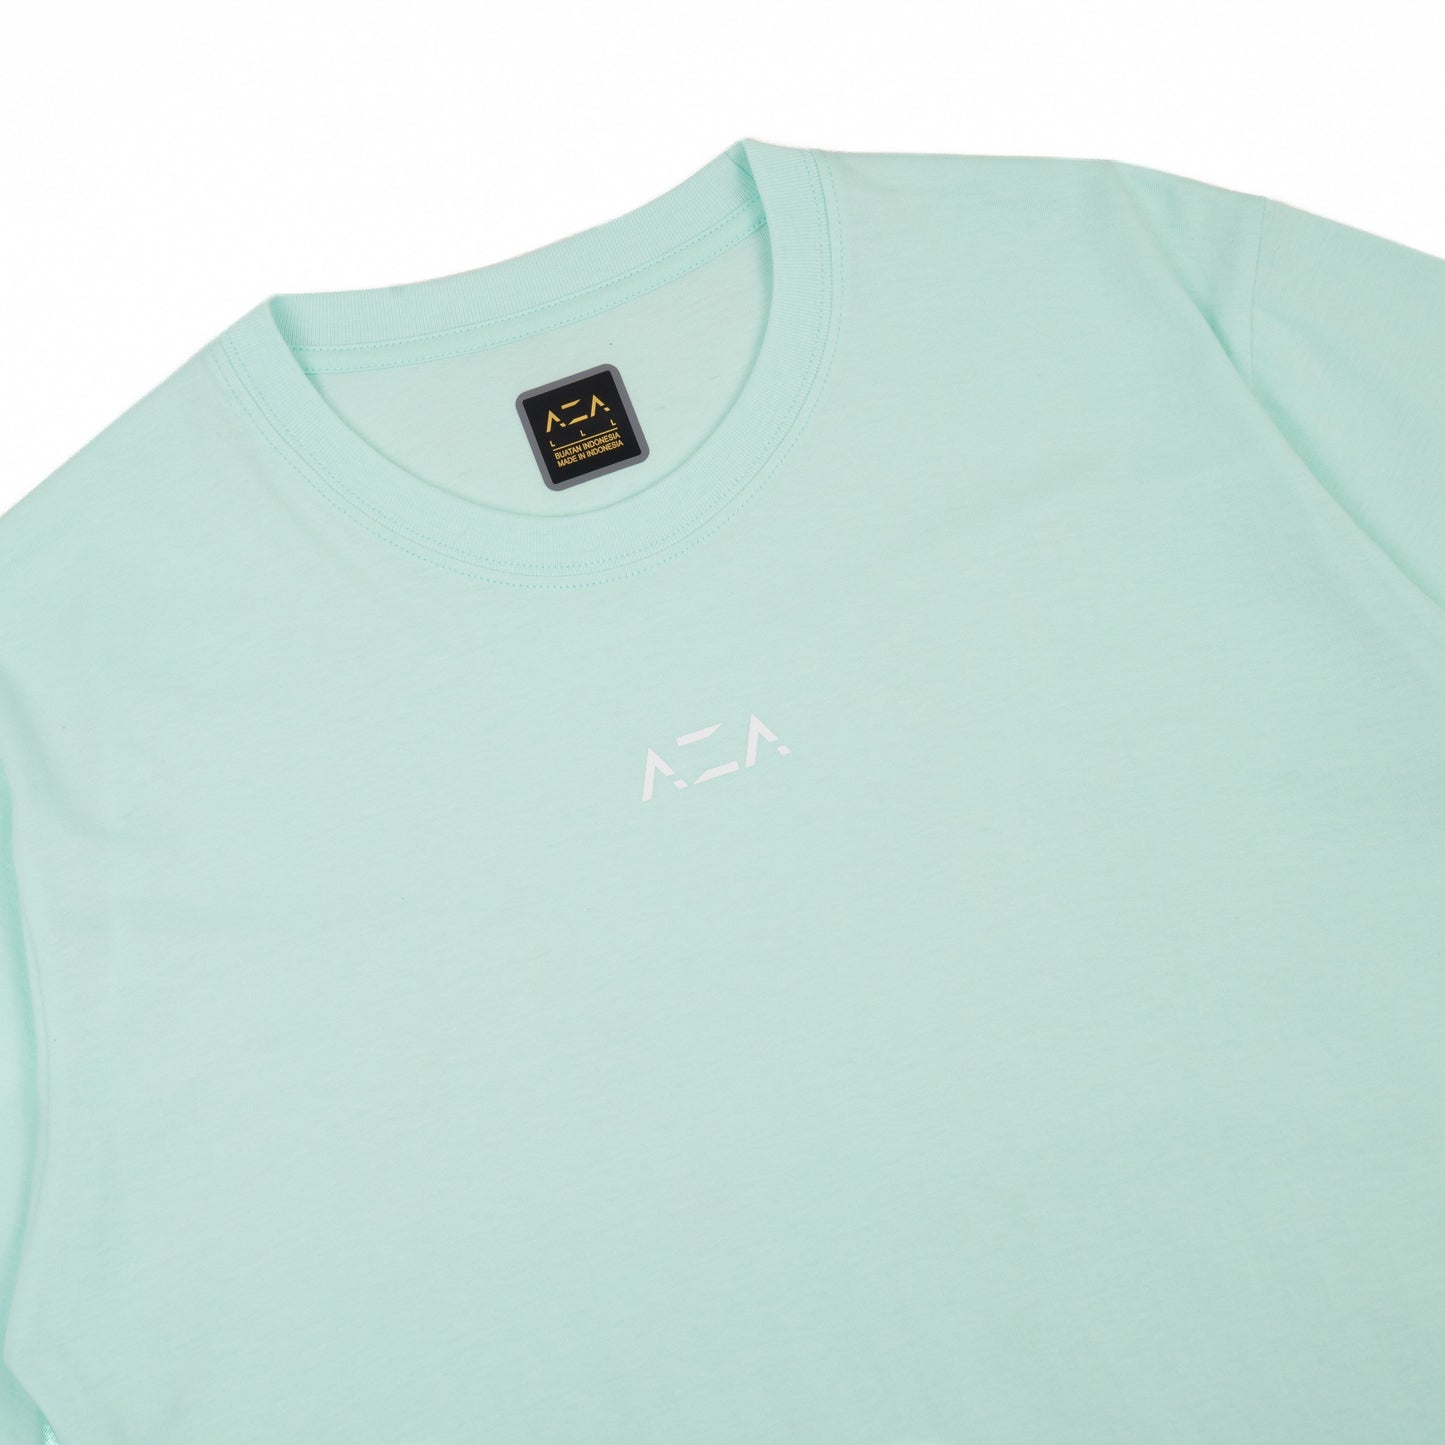 AZA T-Shirt Pro Basic Edition - Mint Green